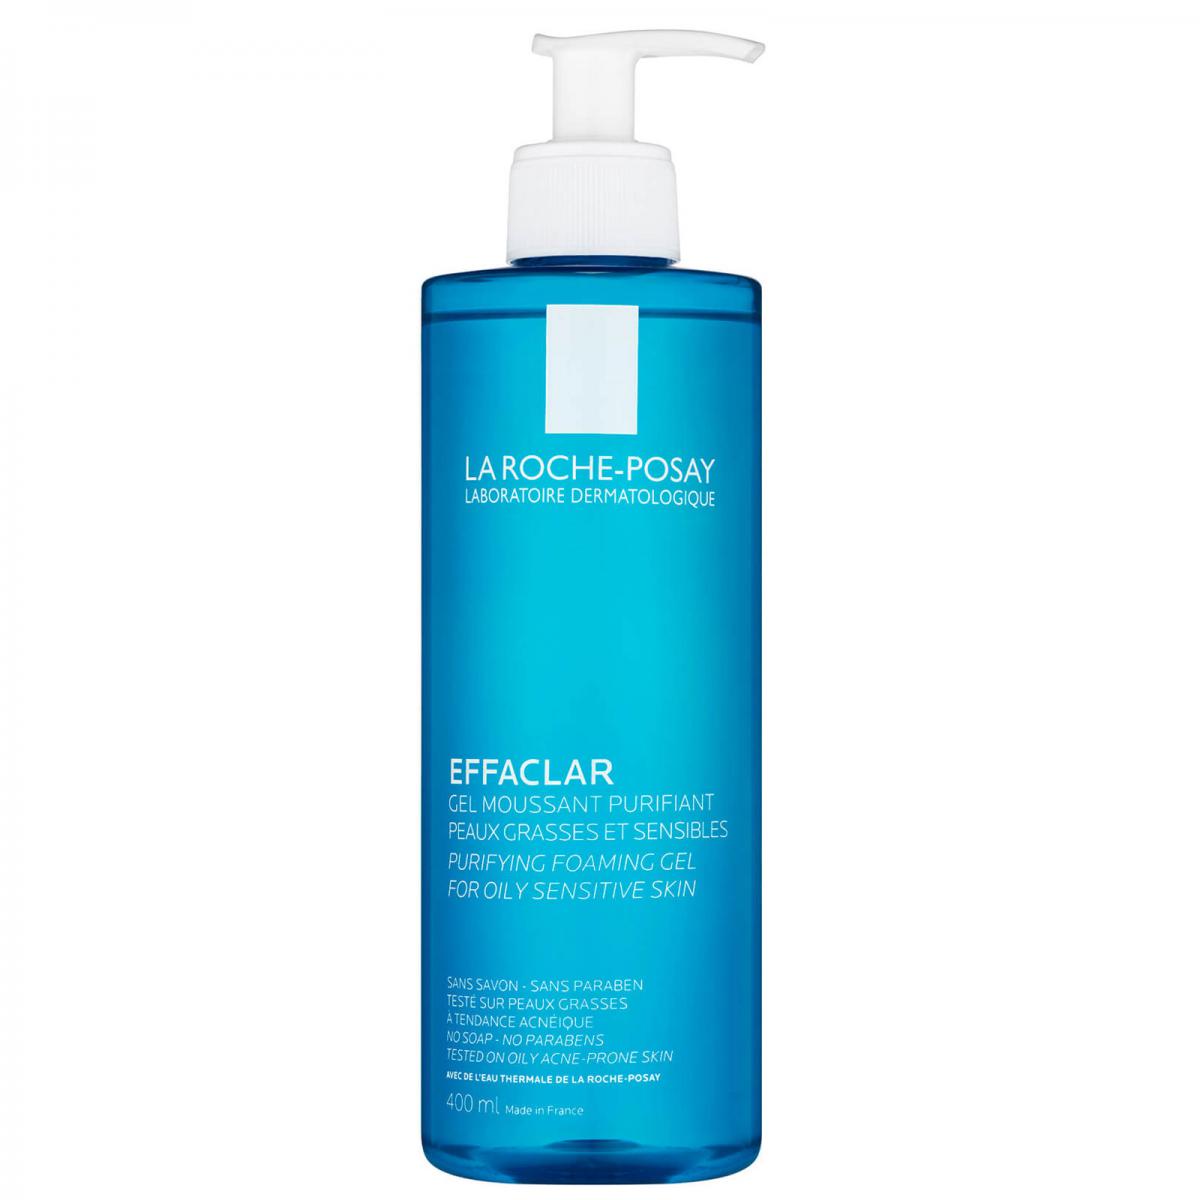 ژل شوینده روزانه پوست های چرب و حساس - La Roche Posay Effaclar Purifying Foaming Gel For Oily Sensitive Skin 400ml